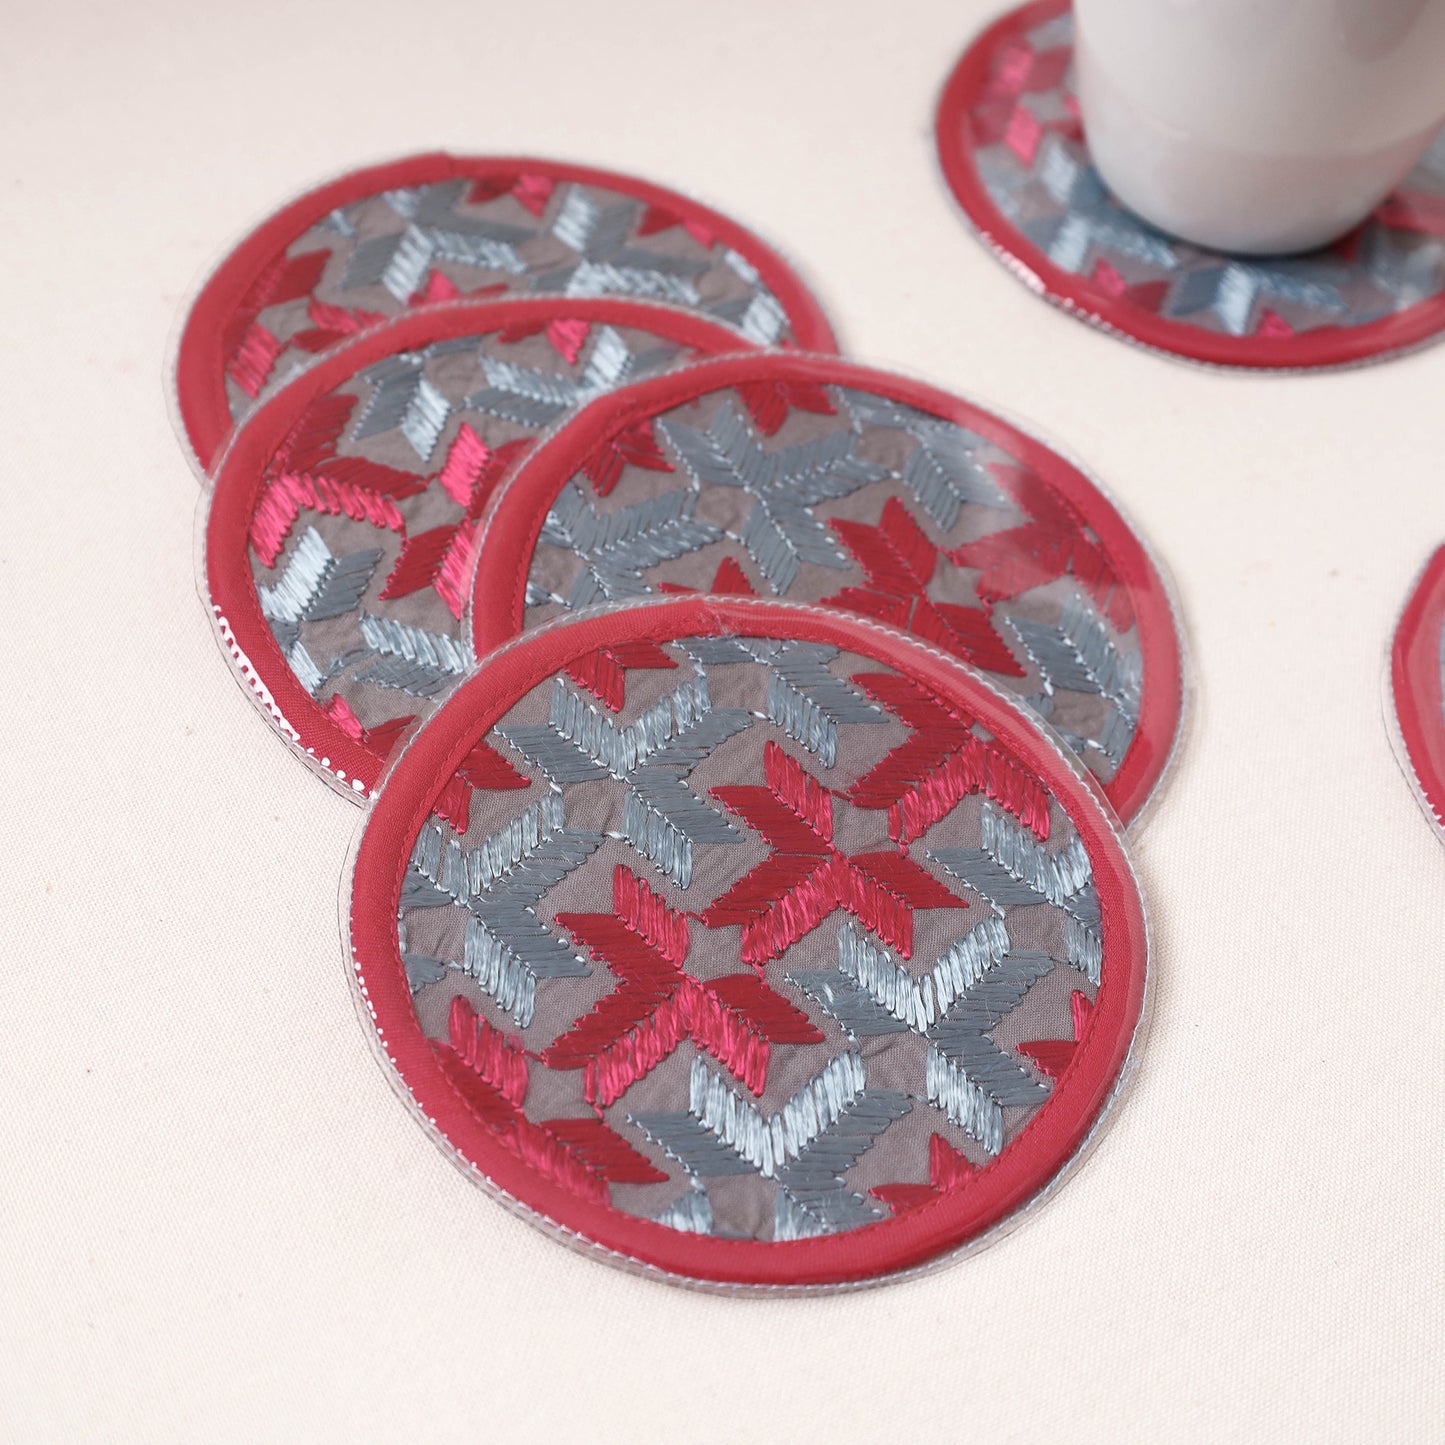 Phulkari Hand Embroidery Laminated Coasters (Set of 6)